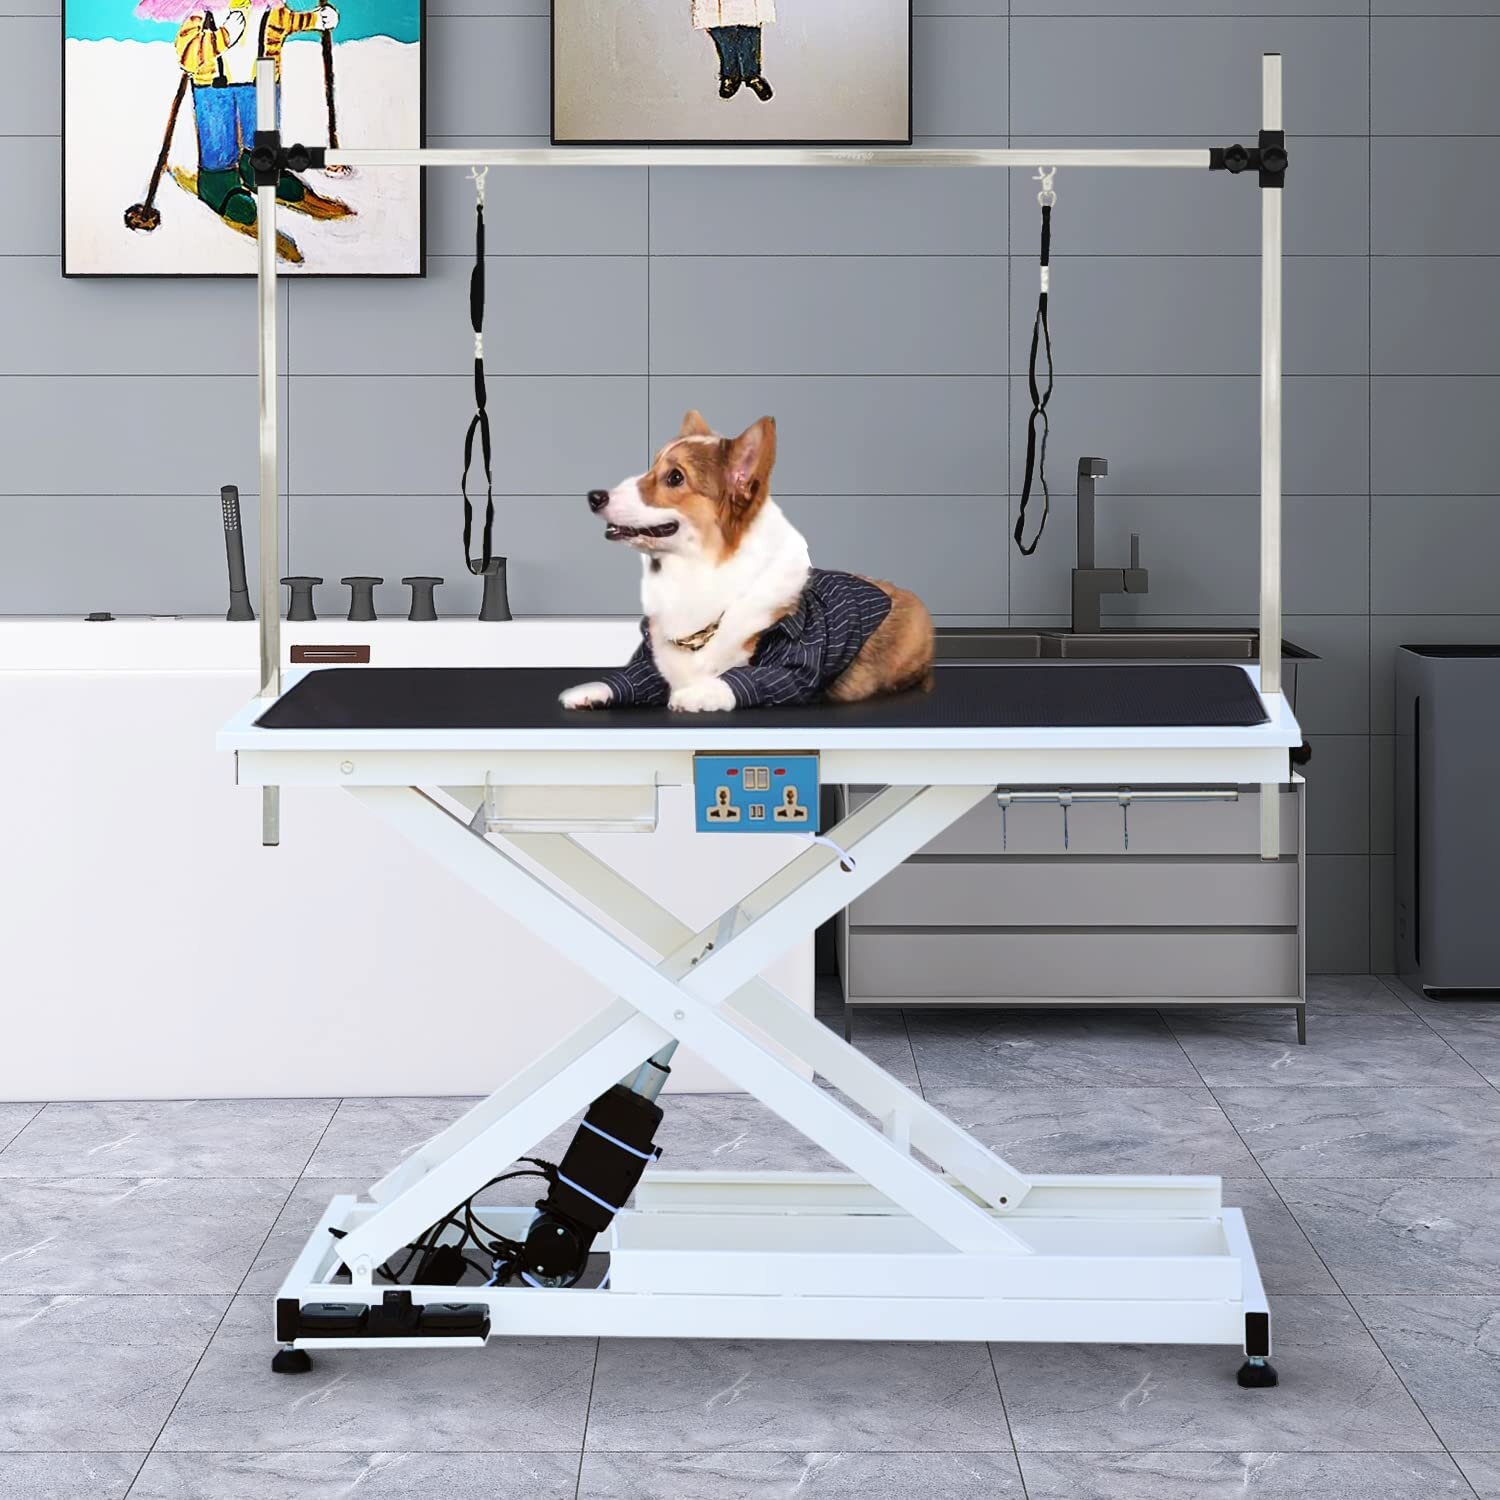 Mats & Flooring - Dog Groomer Business Aids - Dog Grooming